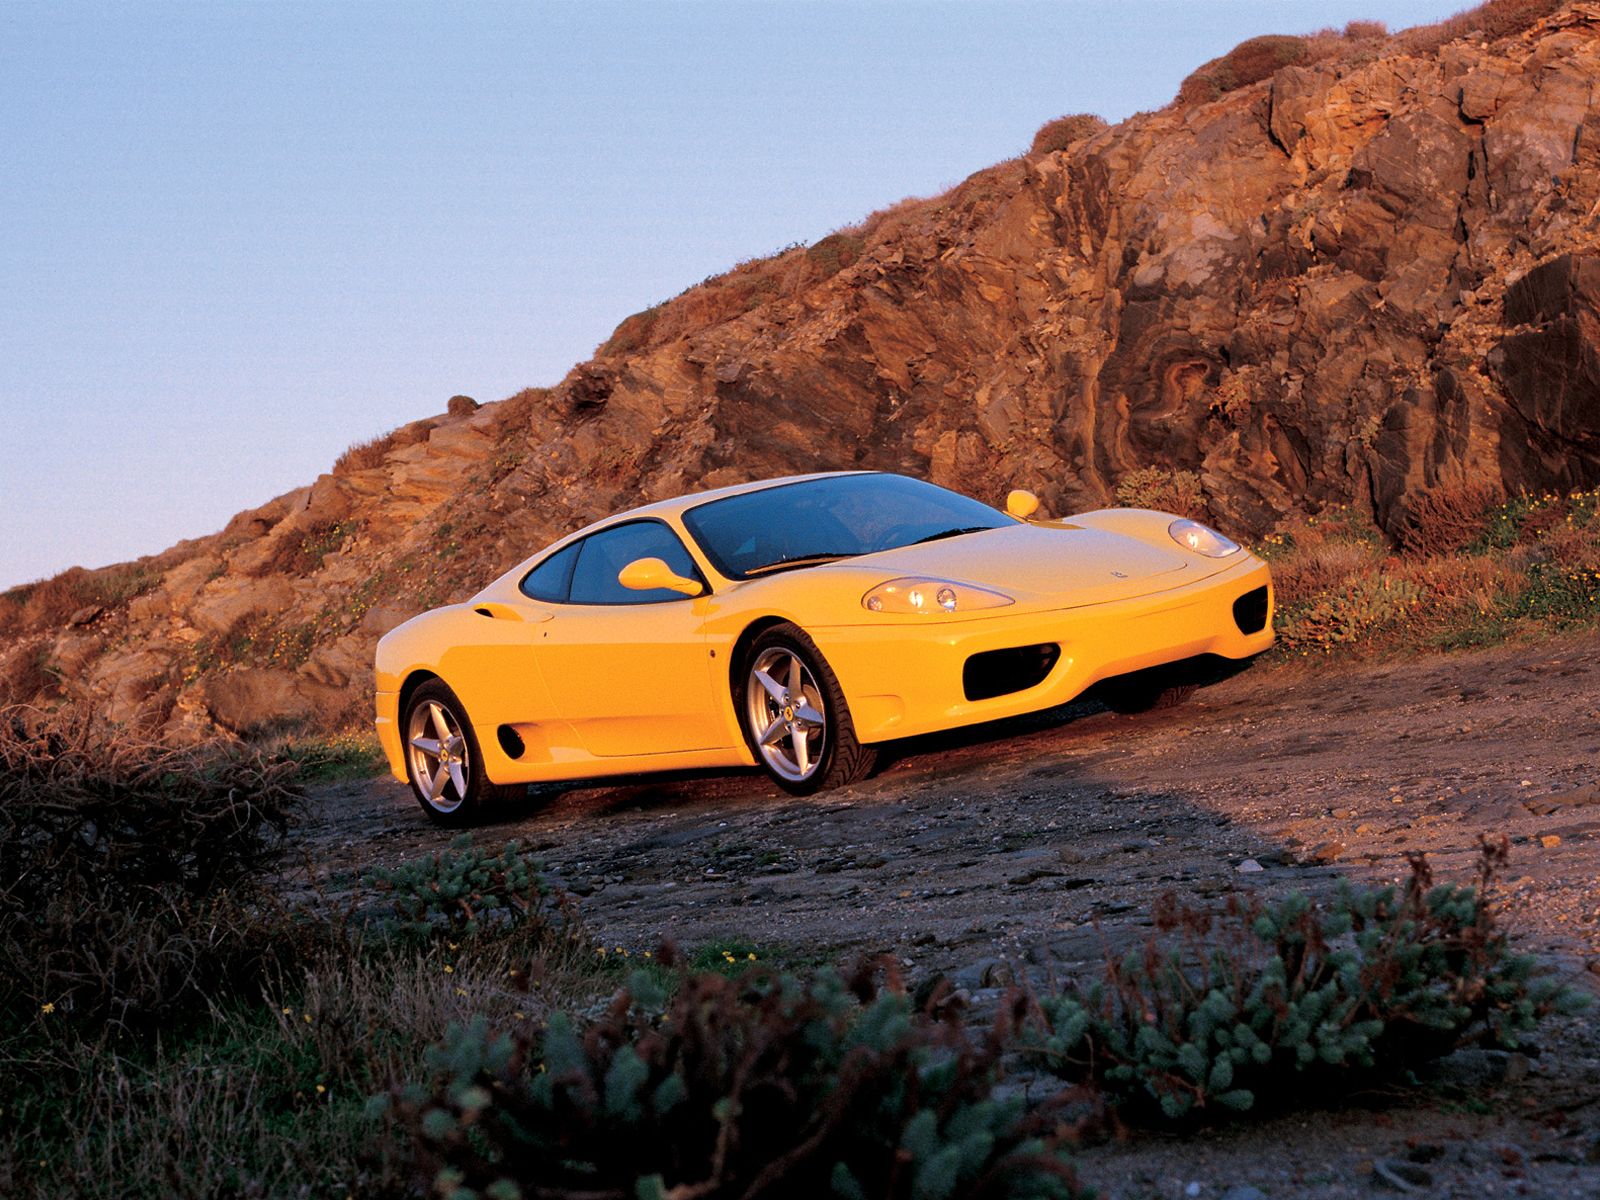 https://blogger.googleusercontent.com/img/b/R29vZ2xl/AVvXsEjN0xC3tfR3oapX2CoyEzjm0Bw5h00Mrgd2iBrTVObhaMgURCRjzN31iEdKp70etTL1K3X8w3kJgr5uqkv2HR2fg5R39gVA9OtddClkrYLgy6YbJVzIGMnVCn5lnlRXuQn0QgMnUSLayTw/s1600/Yellow-Ferrari-360-Modena-Wallpaper.jpg